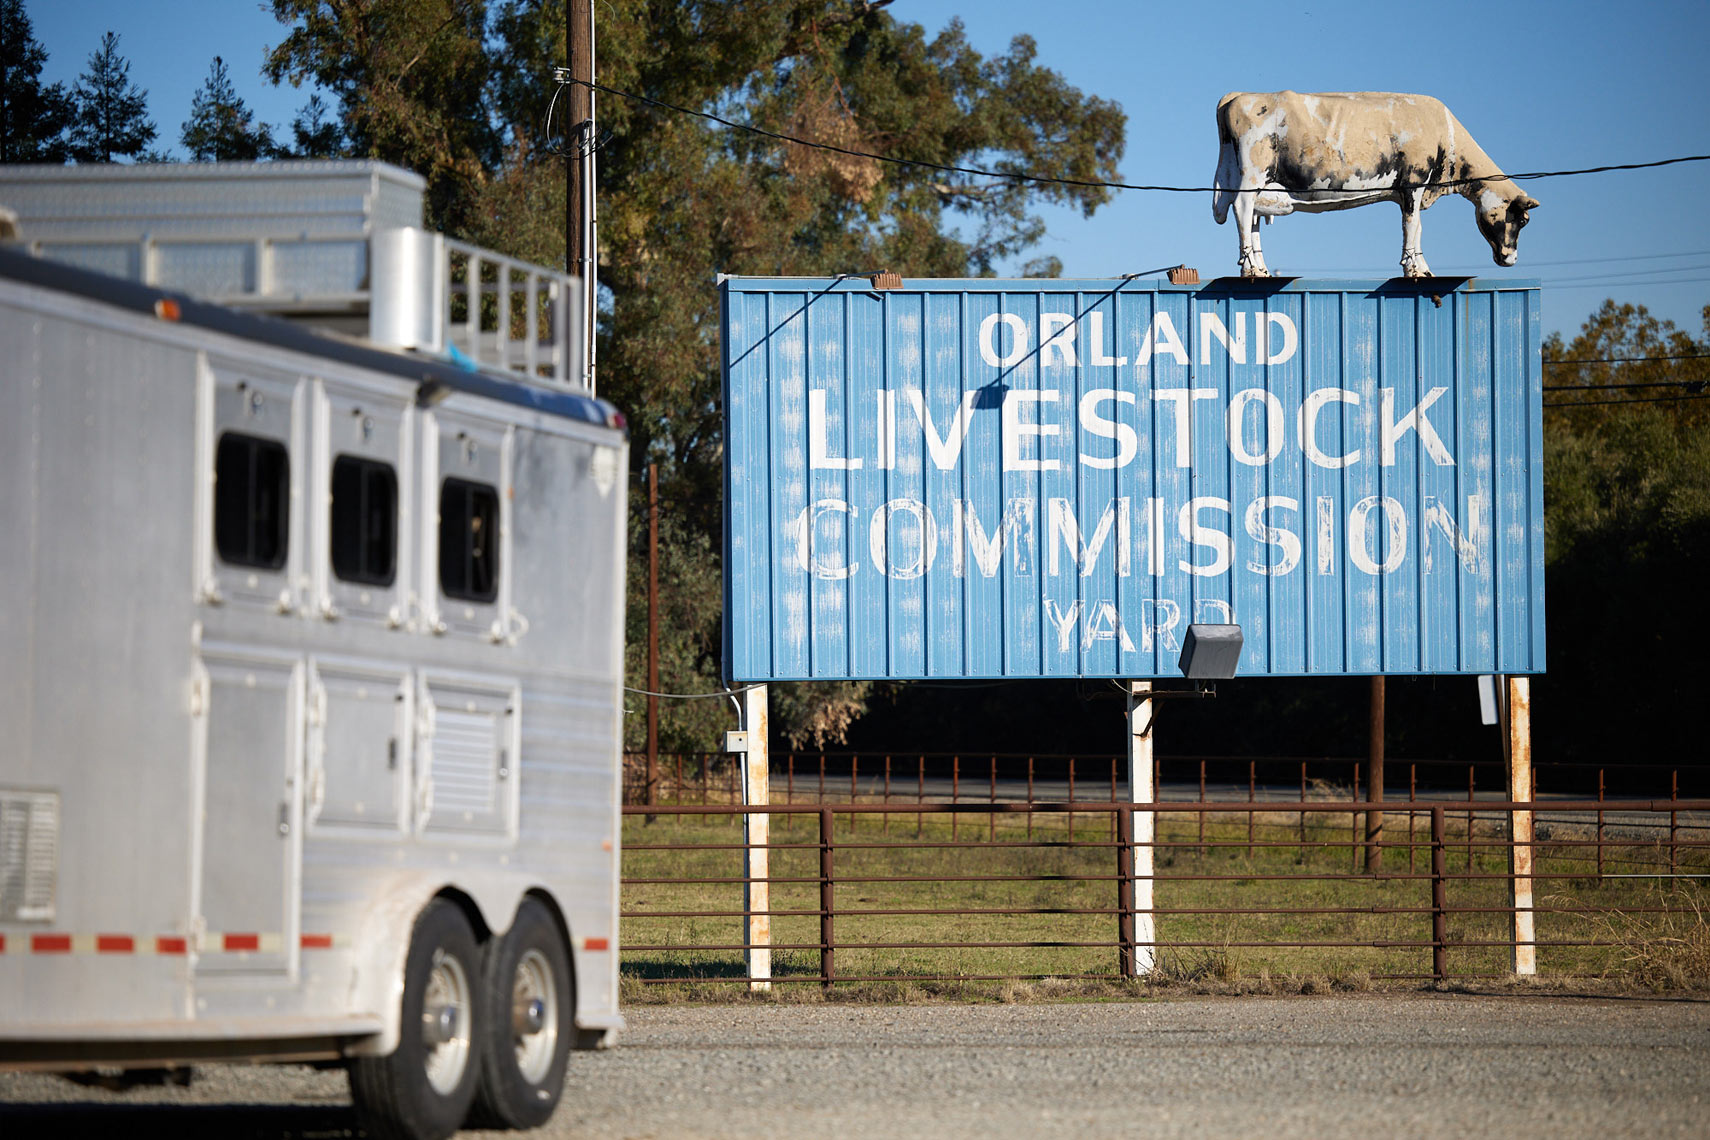 Orland Livestock Commission Yard